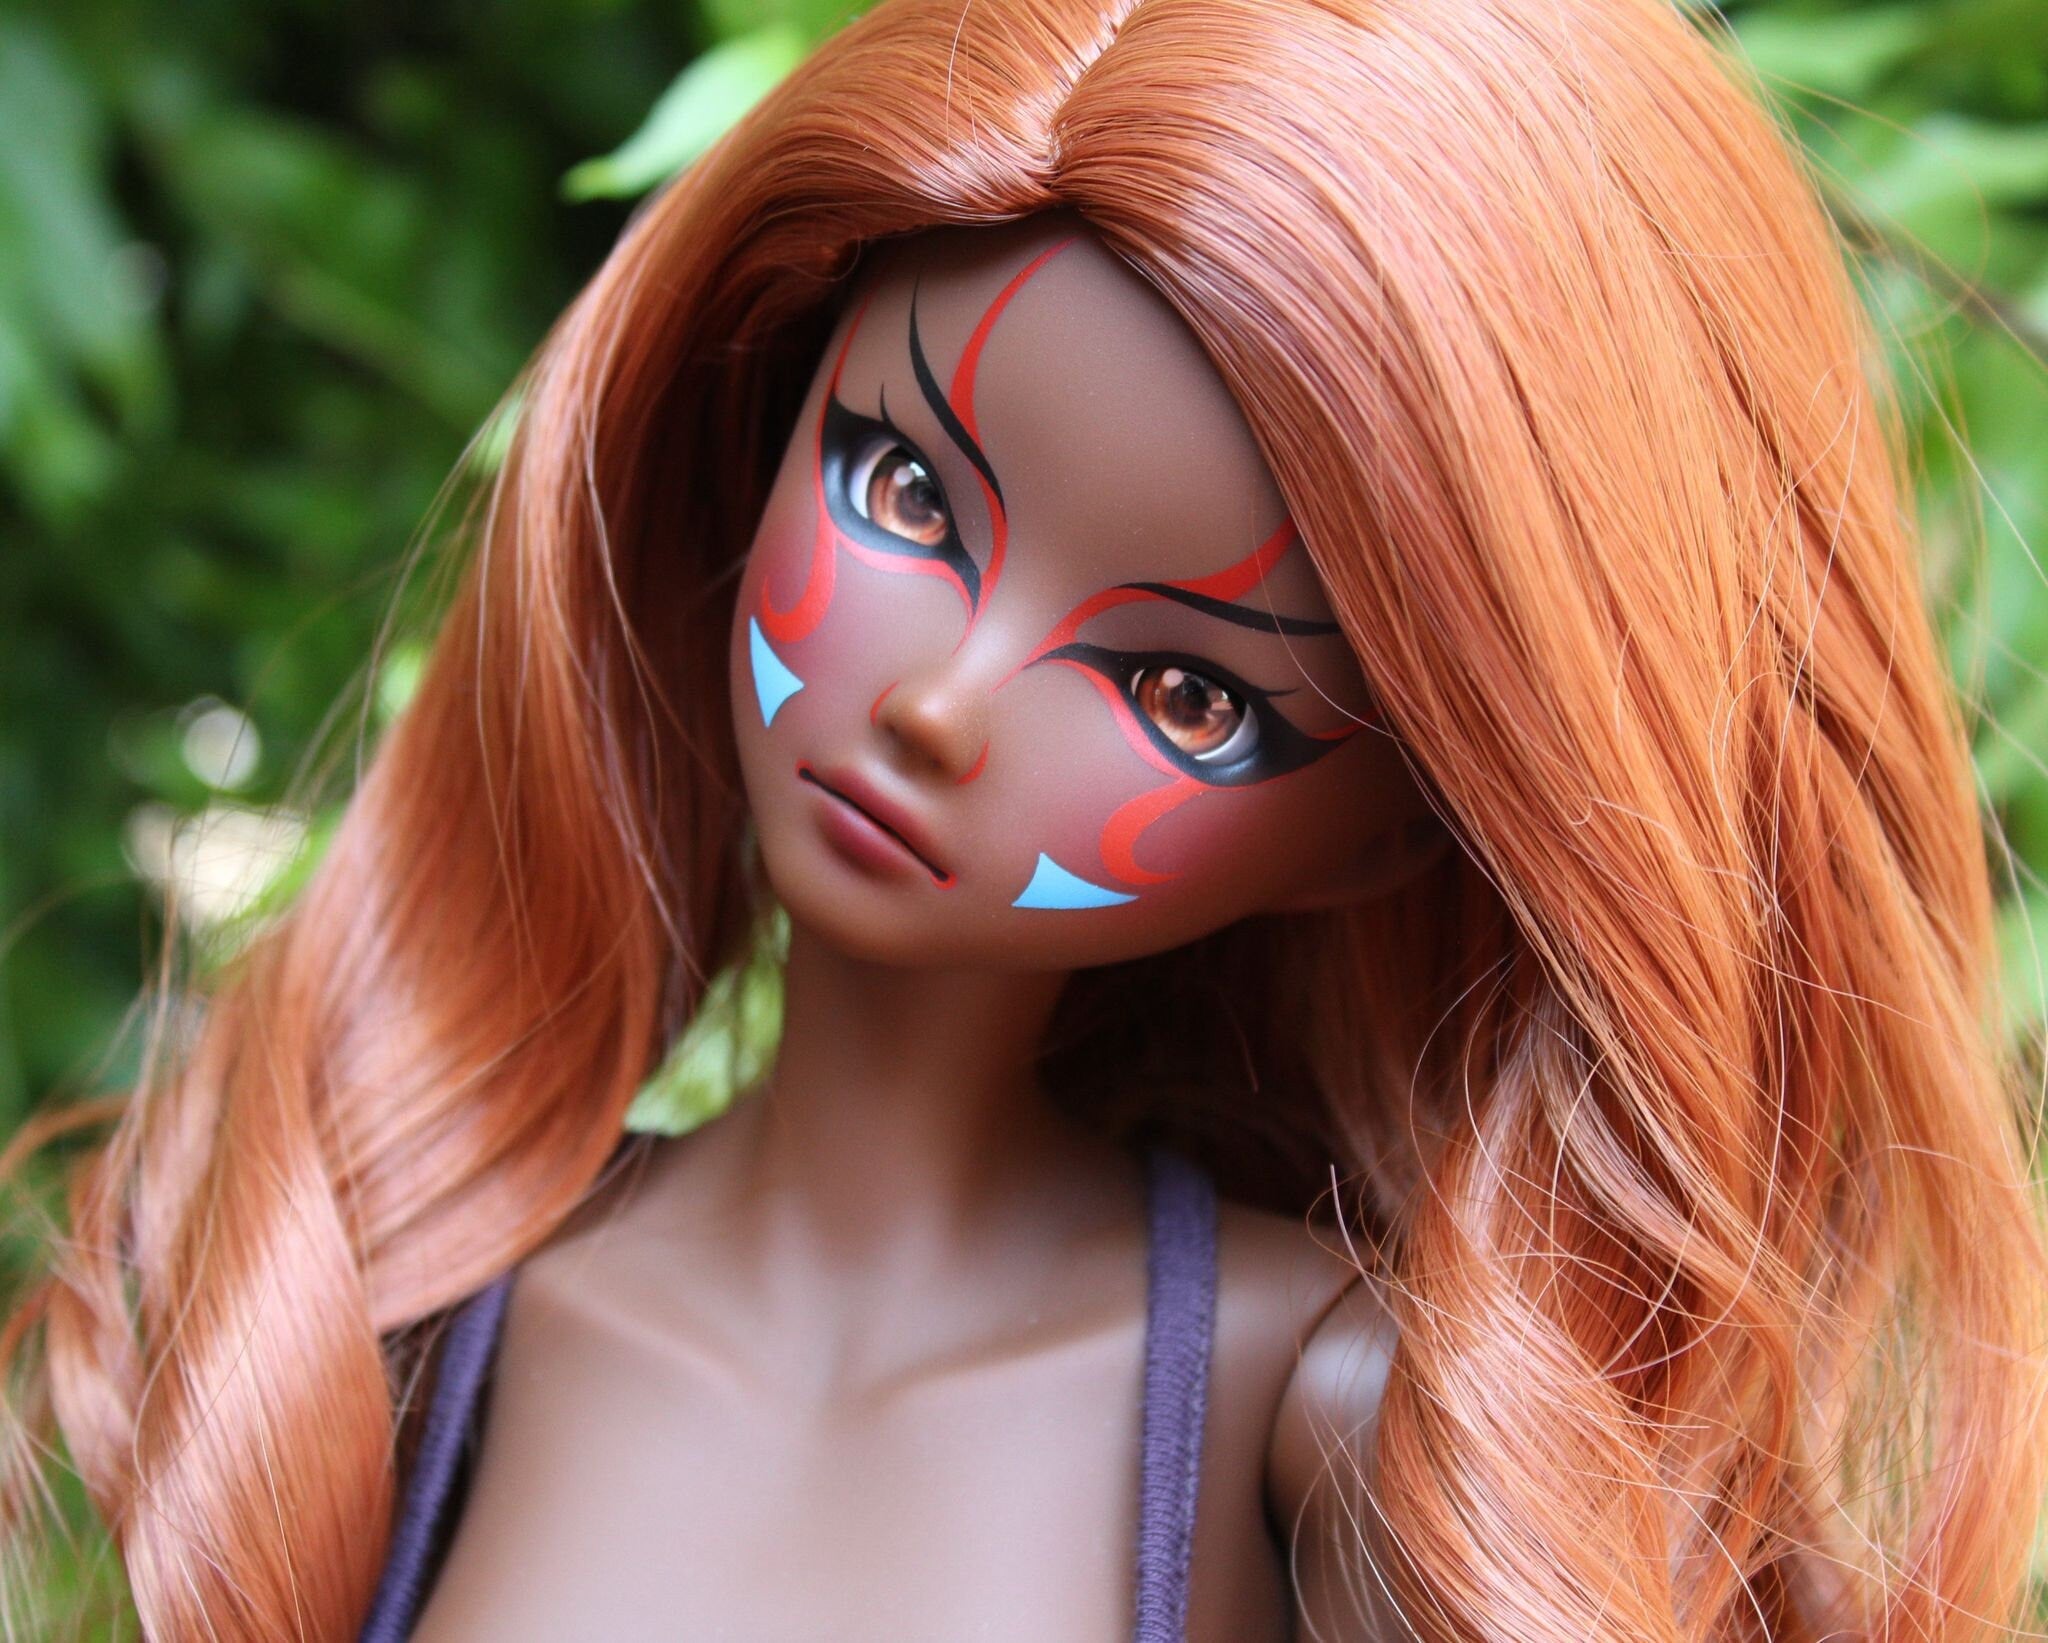 Custom doll Wig for Smart Dolls- Heat Safe - Tangle Resistant- 8.5" head size of Bjd, SD, Dollfie Dream dolls  copper red